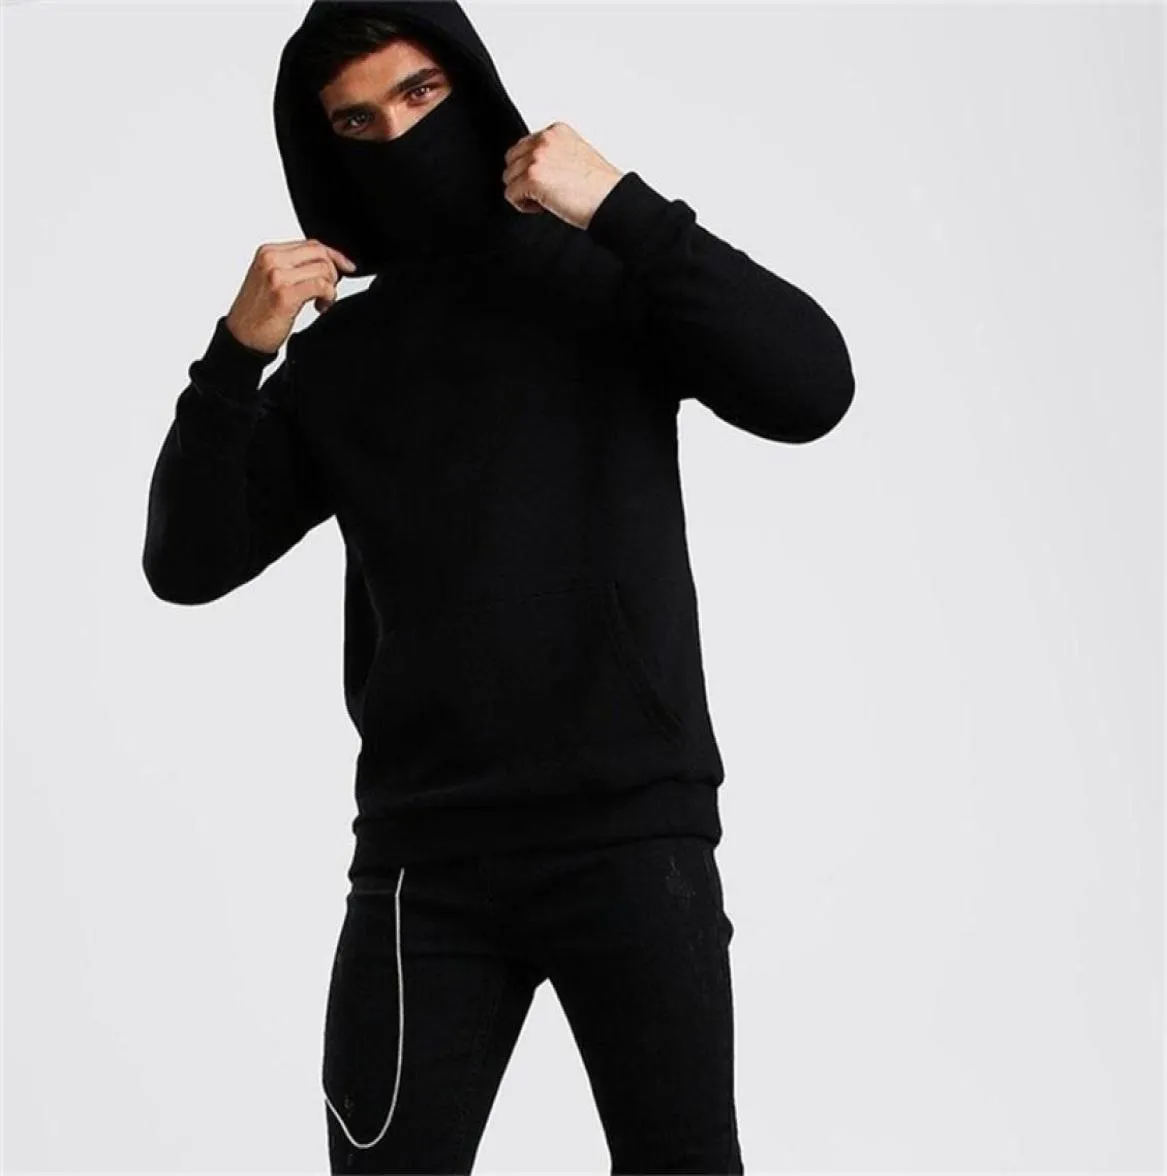 Ninja Hoodies Männer Maske Baumwolle Übergroße Hoodies Sport solide Langarm Winter Mit Kapuze Sweatshirts Männer Kleidung Spot ganze LJ22072060